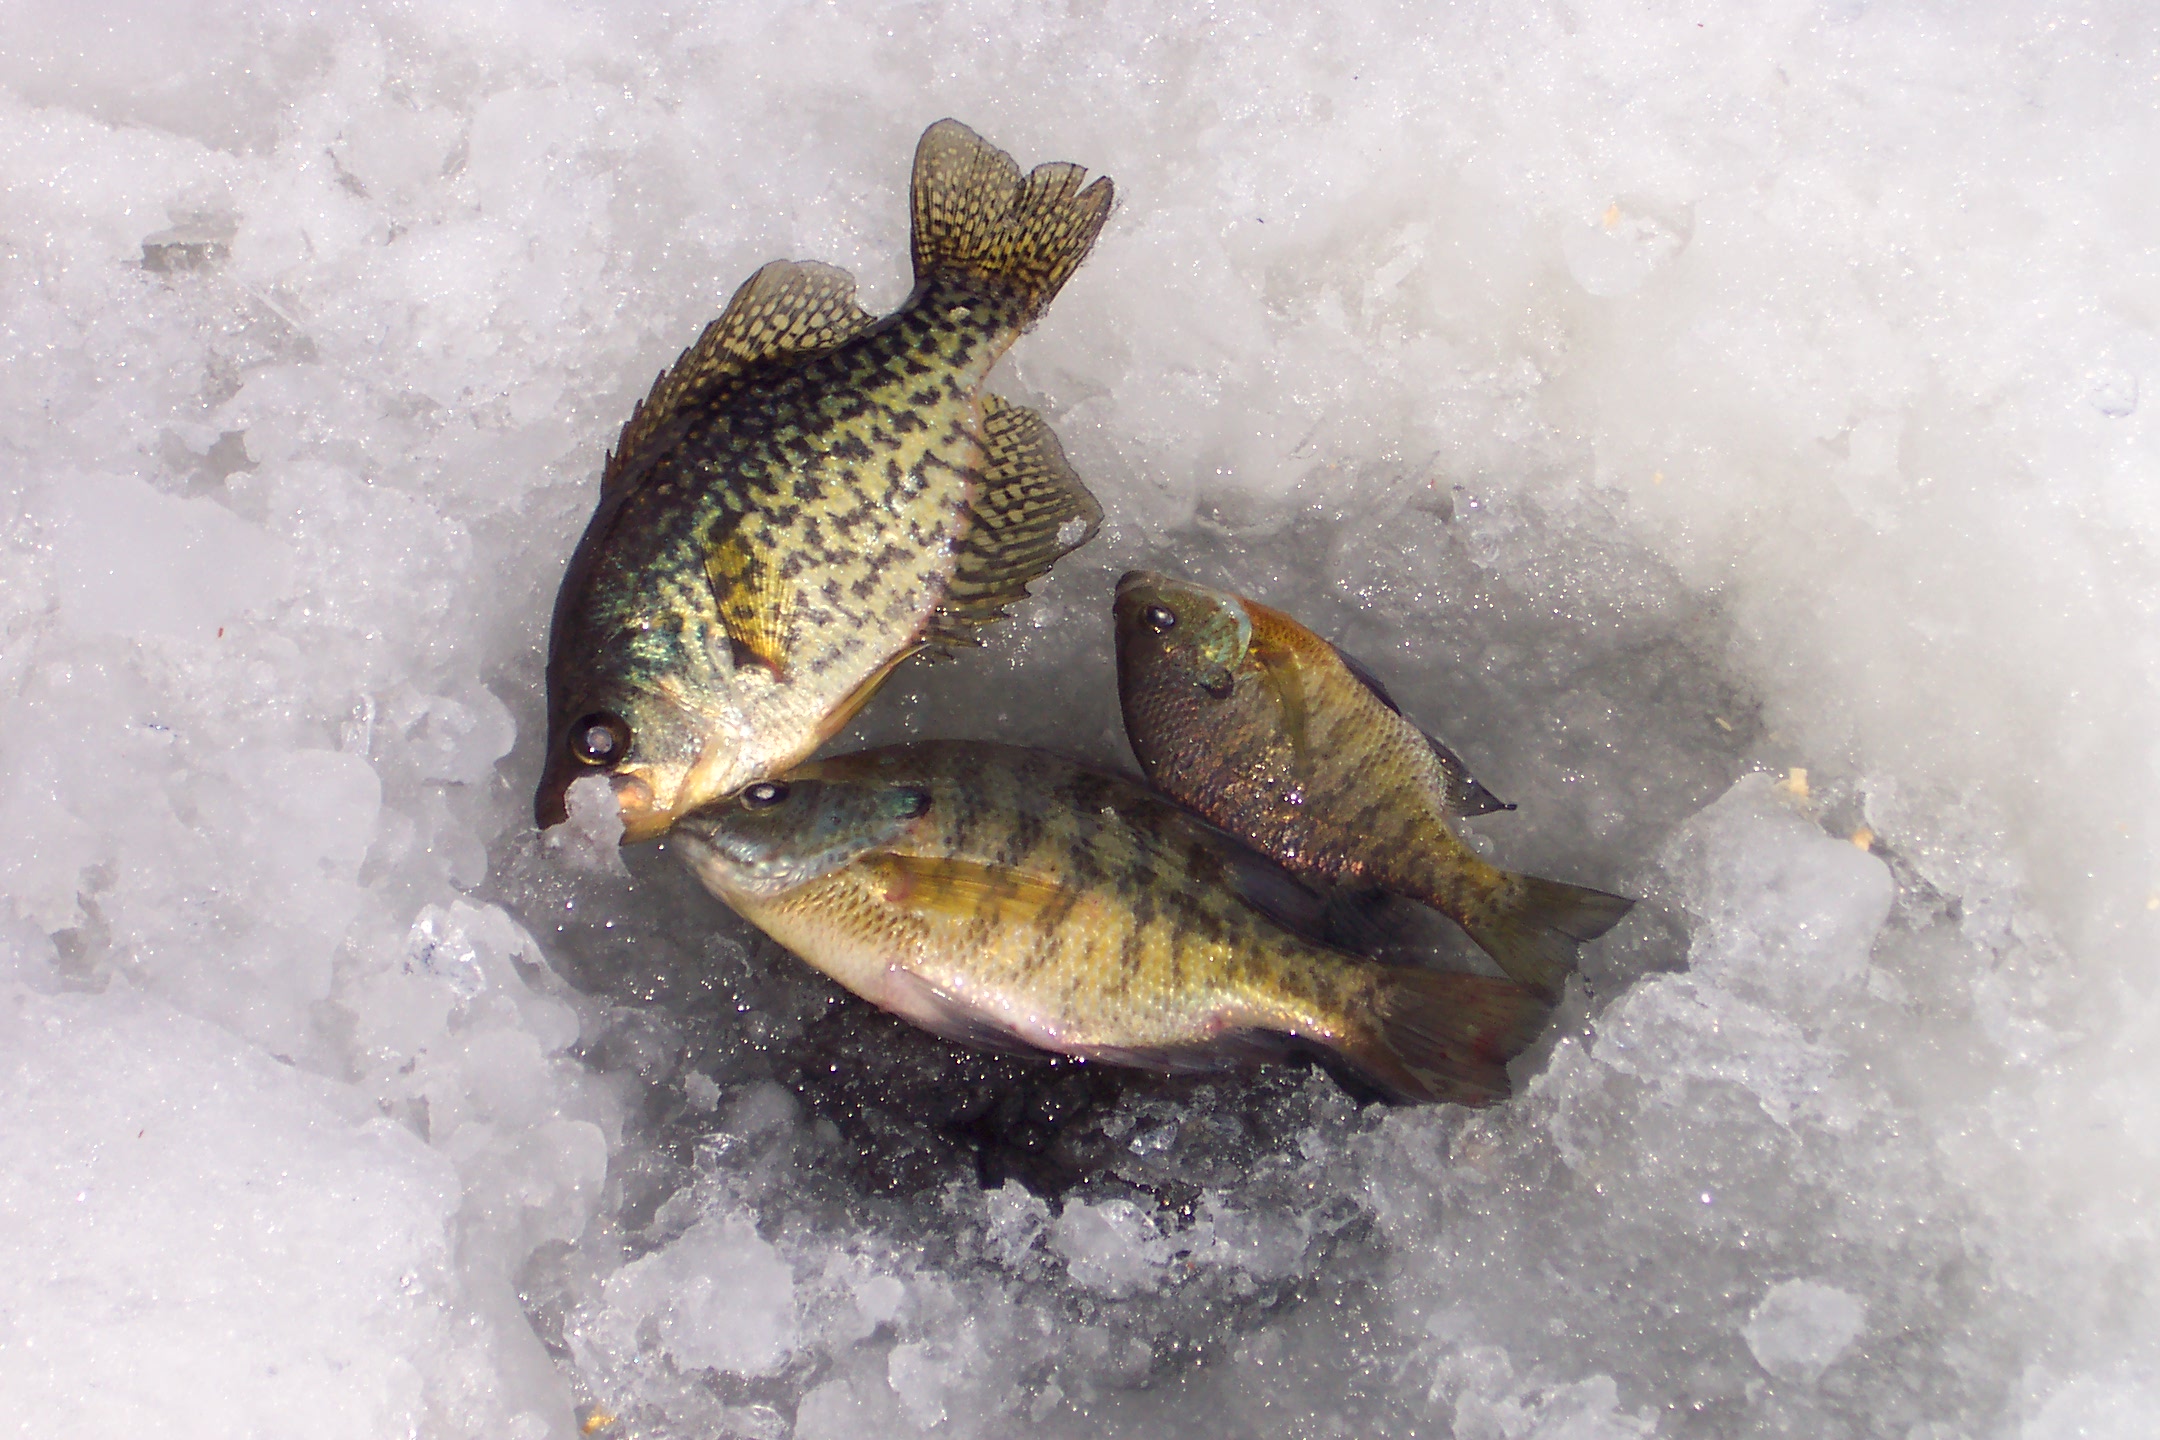 Ice fishing tips • Current Publishing